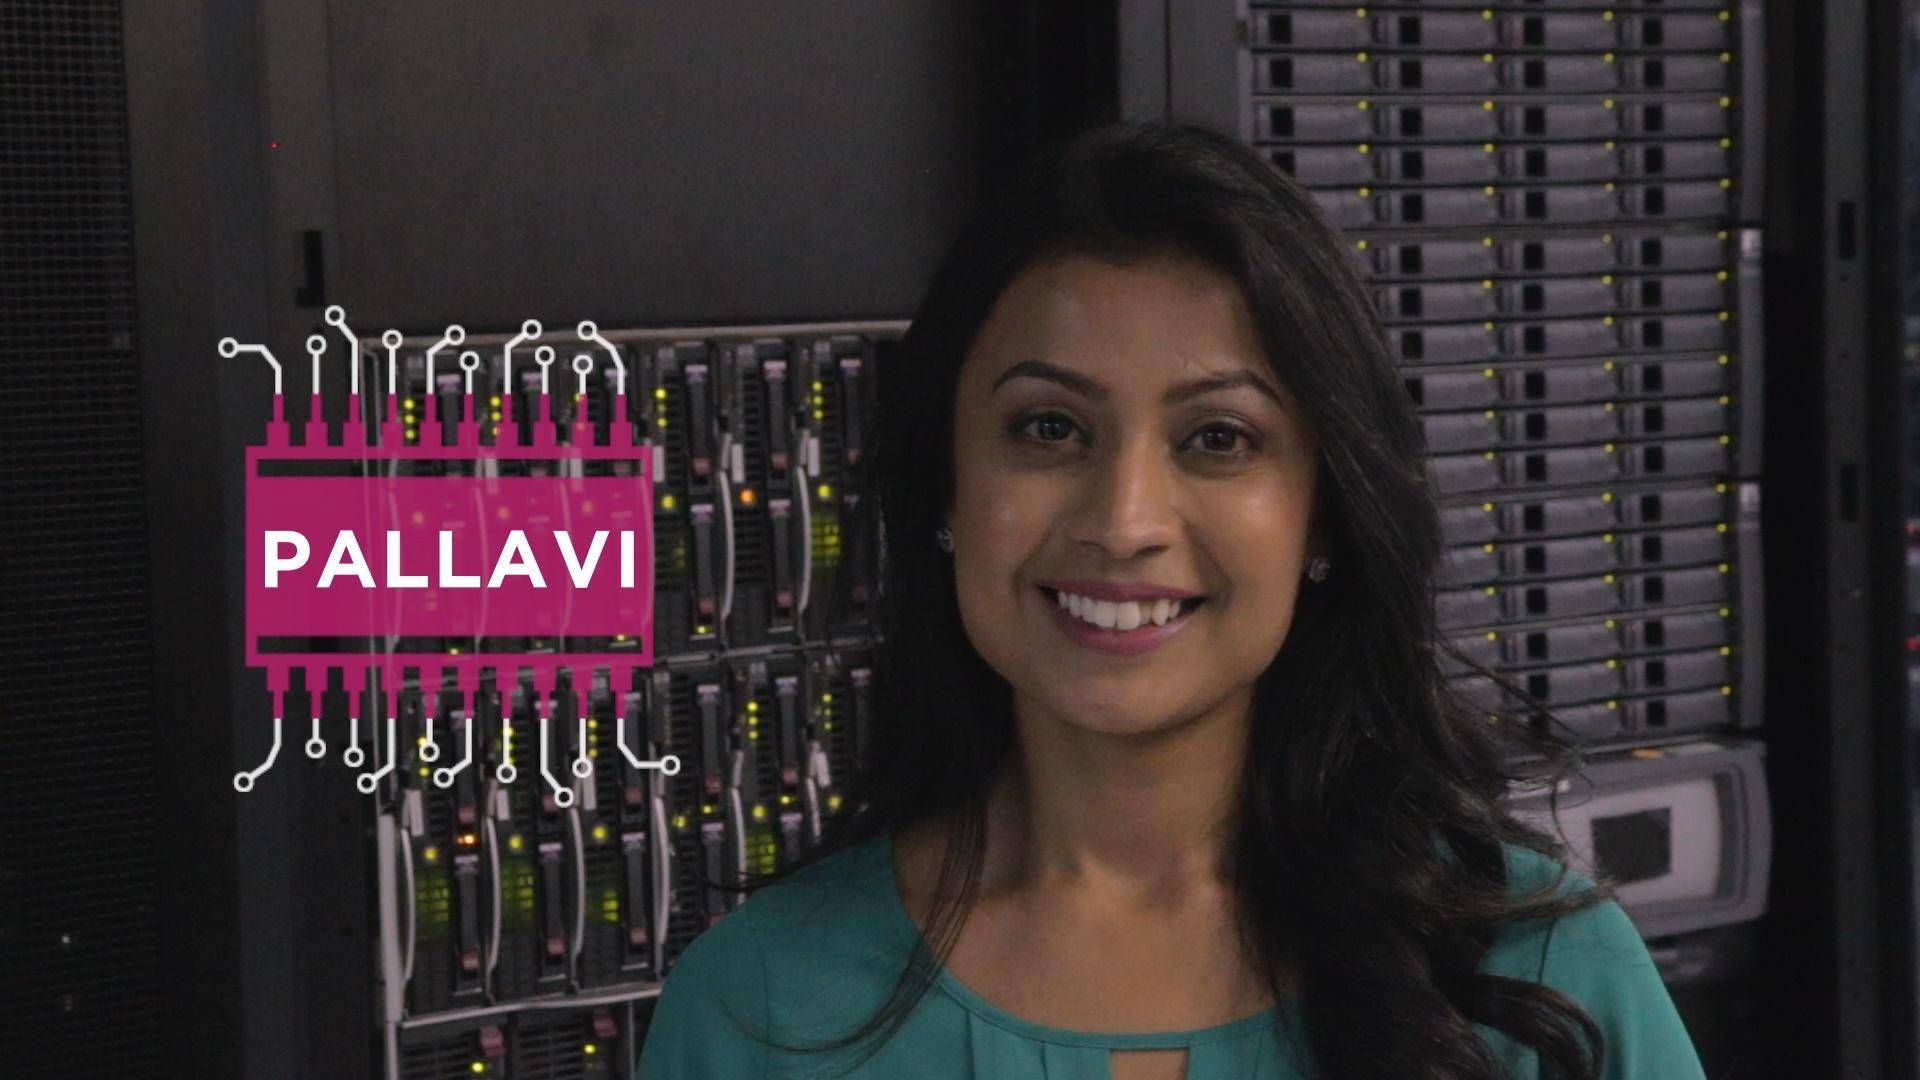 SciGirls Role Models: Pallavi Sharma, IT Project Manager